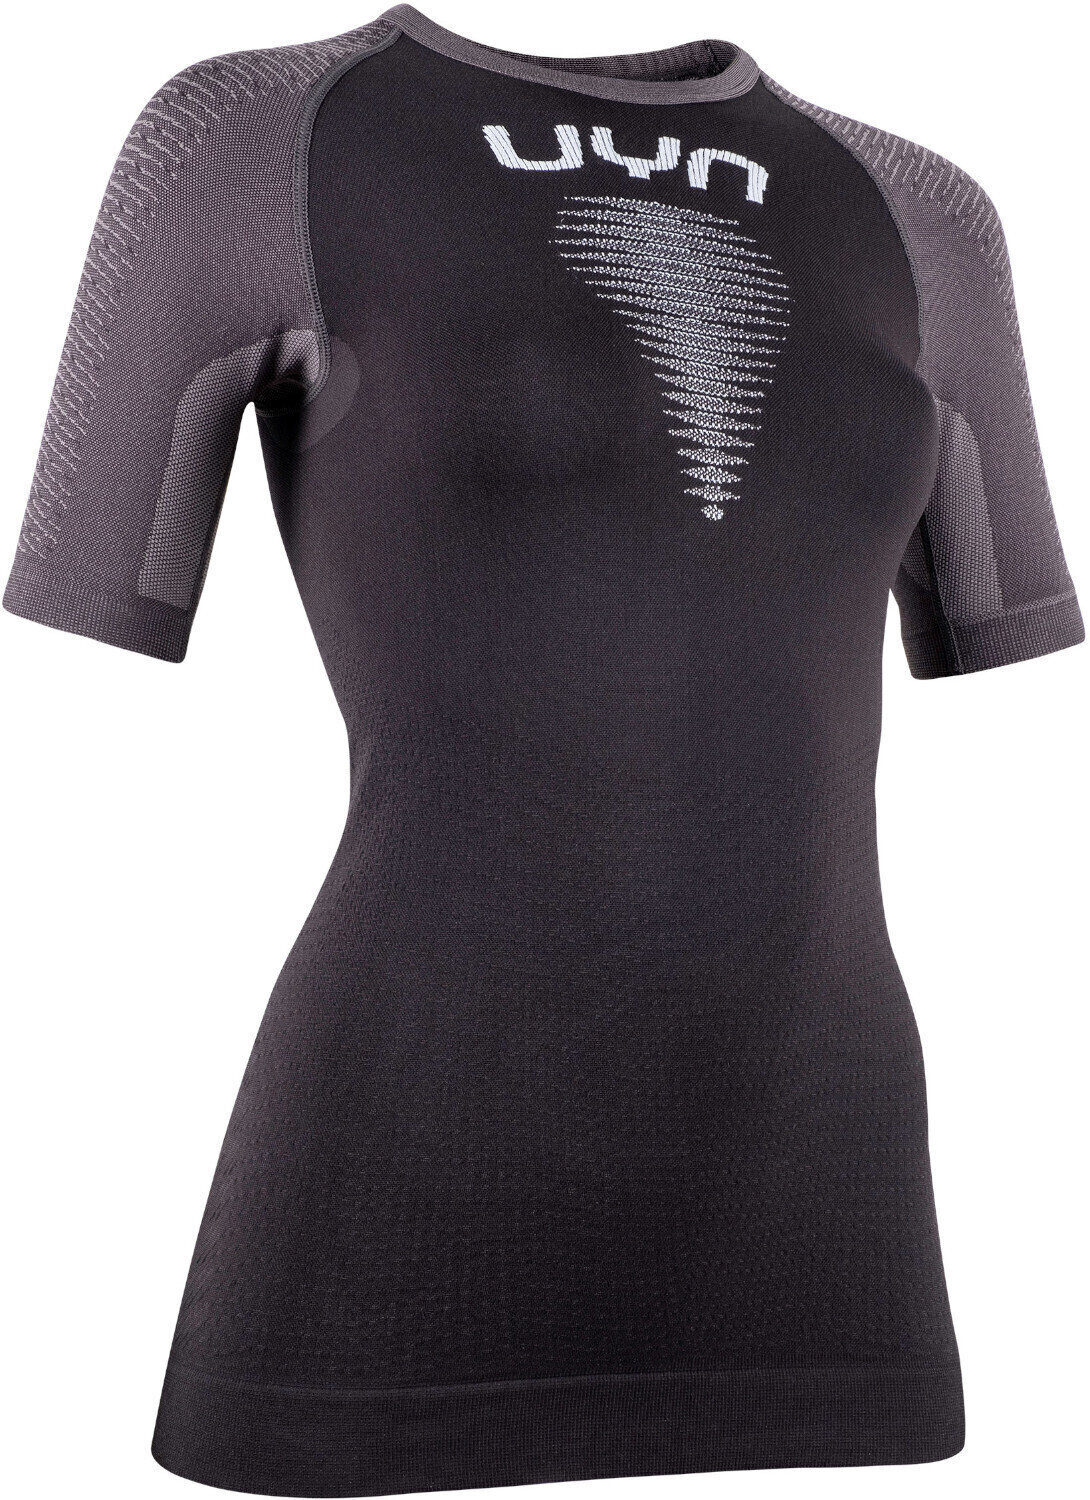 Běžecké tričko s krátkým rukávem
 UYN Marathon Ow Shirt Black/Charcoal/White XS Běžecké tričko s krátkým rukávem